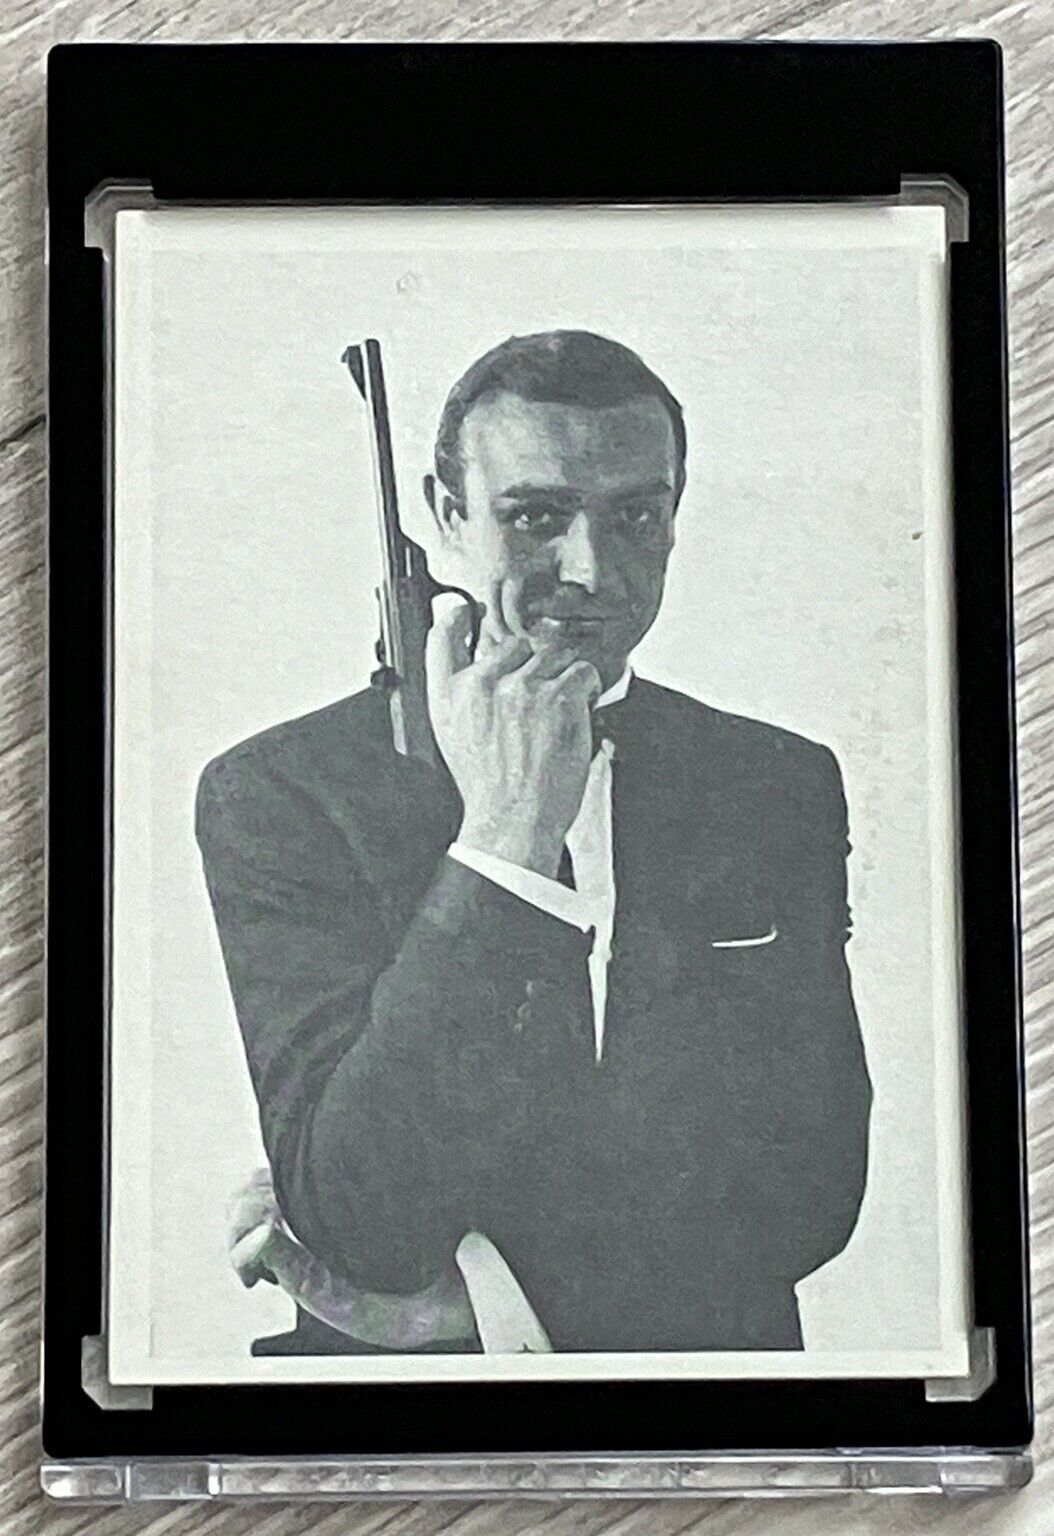 1965 Glidrose Philadelphia #19 Secret Agent Sean Connery James Bond HIGH GRADE